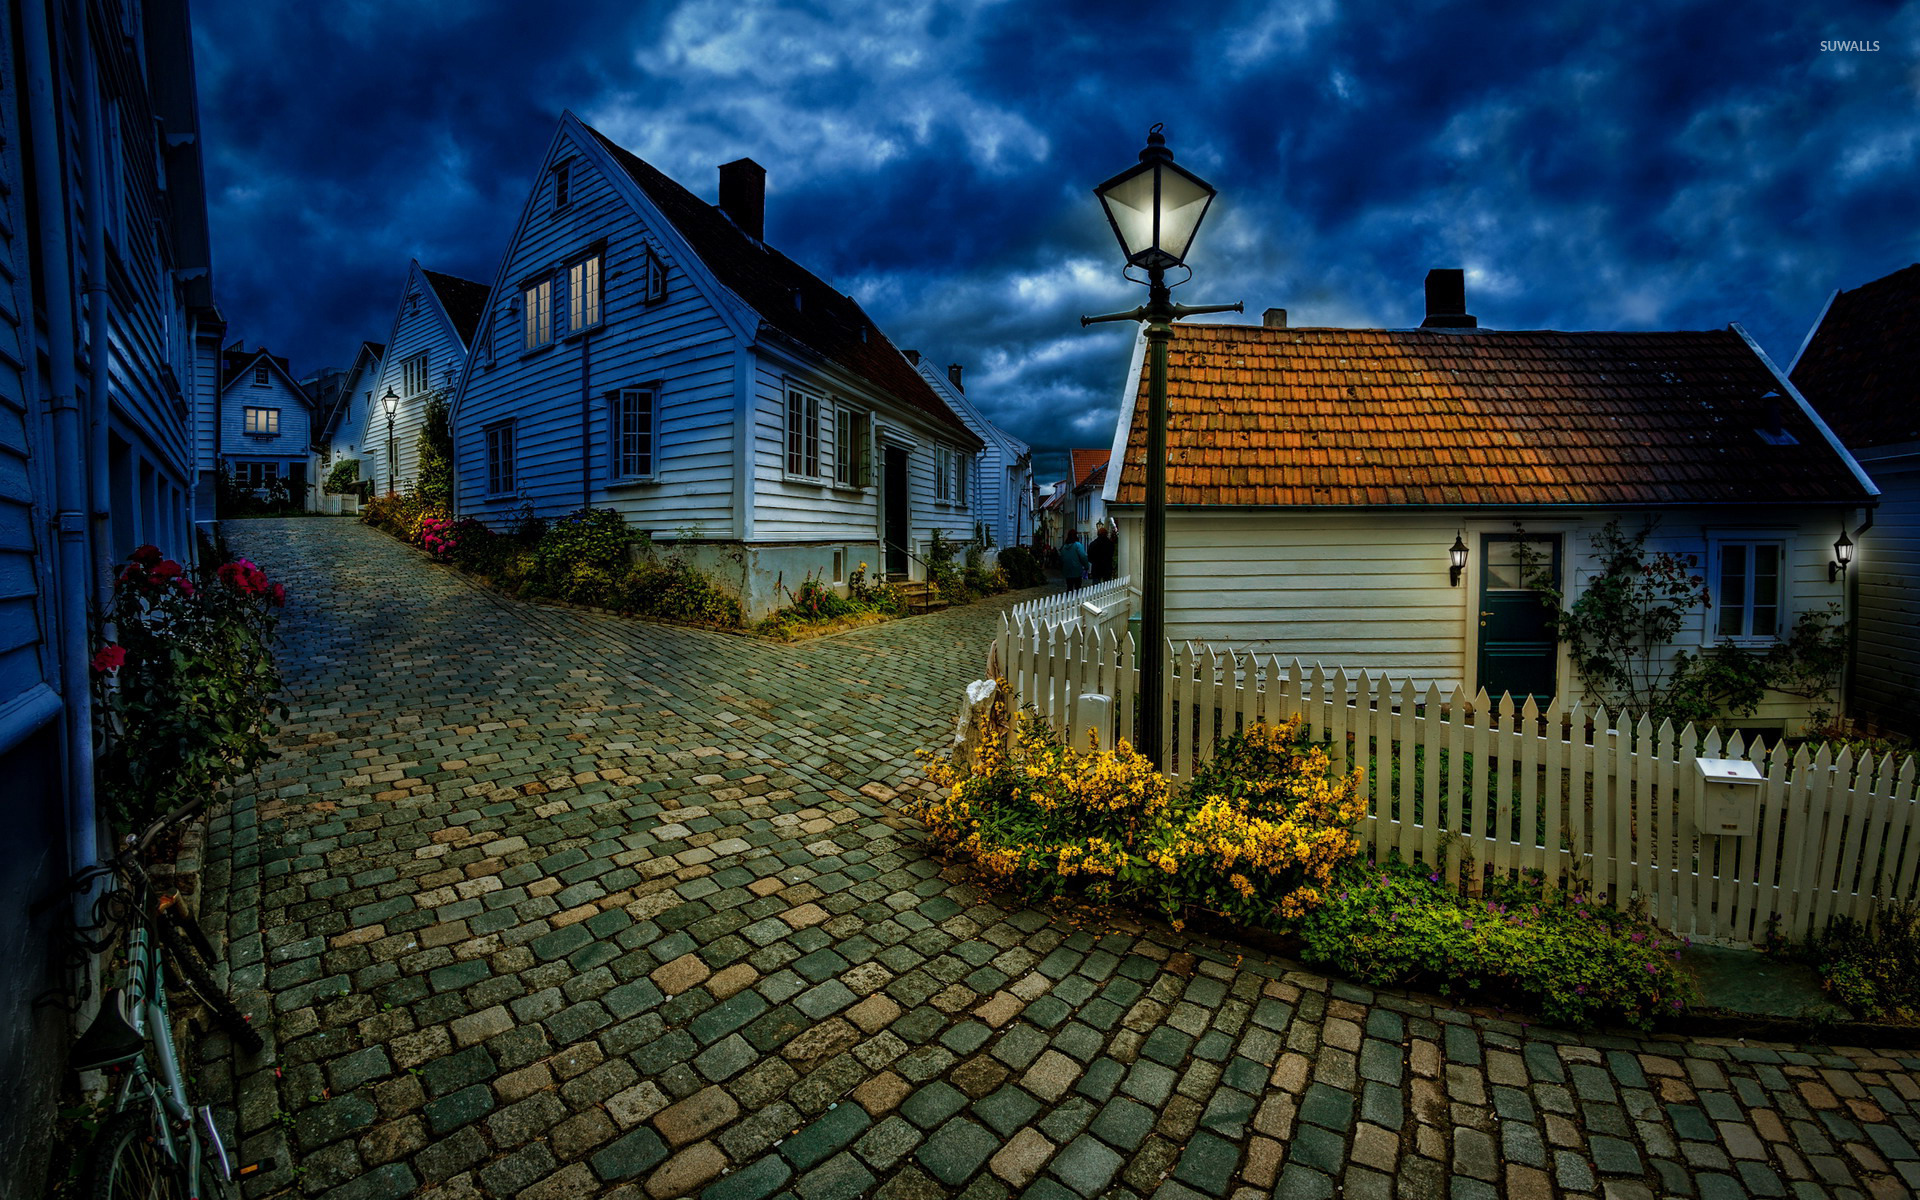 Street in small Norwegian town wallpaper - World wallpapers - #17744